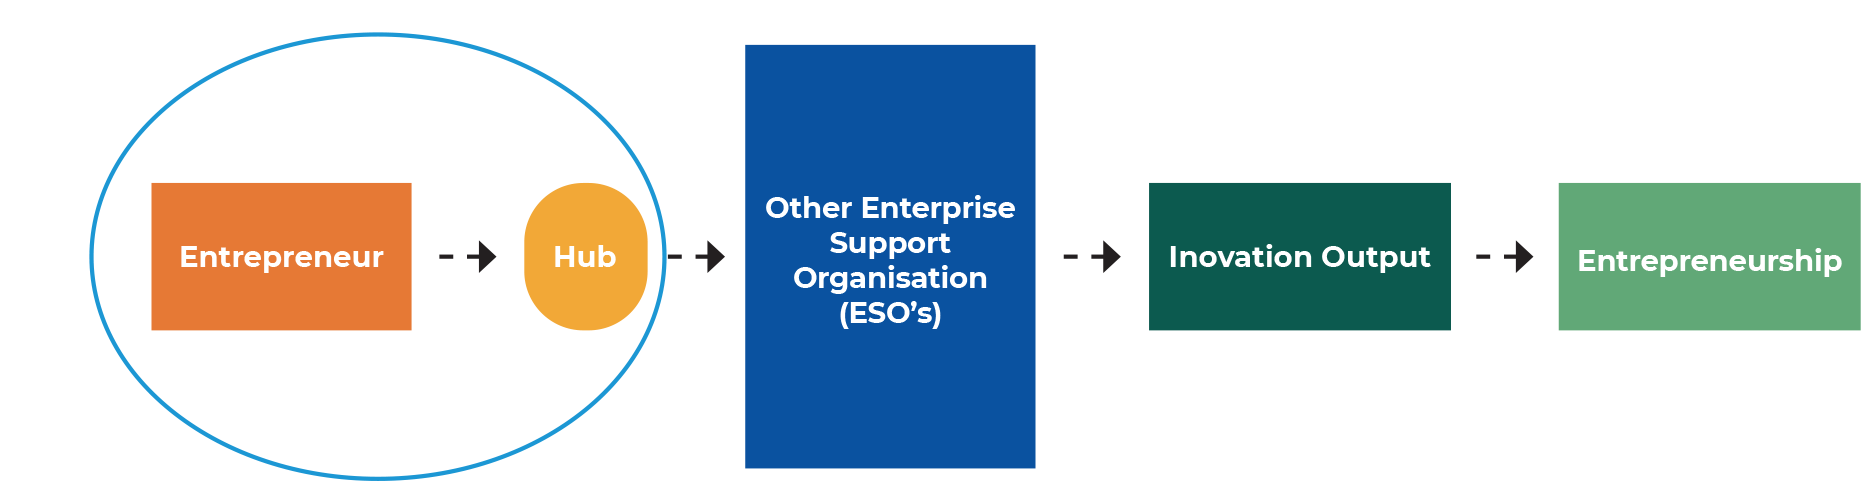 image indicating the basic relationship between a hub and entrepreneurship local ecosystem